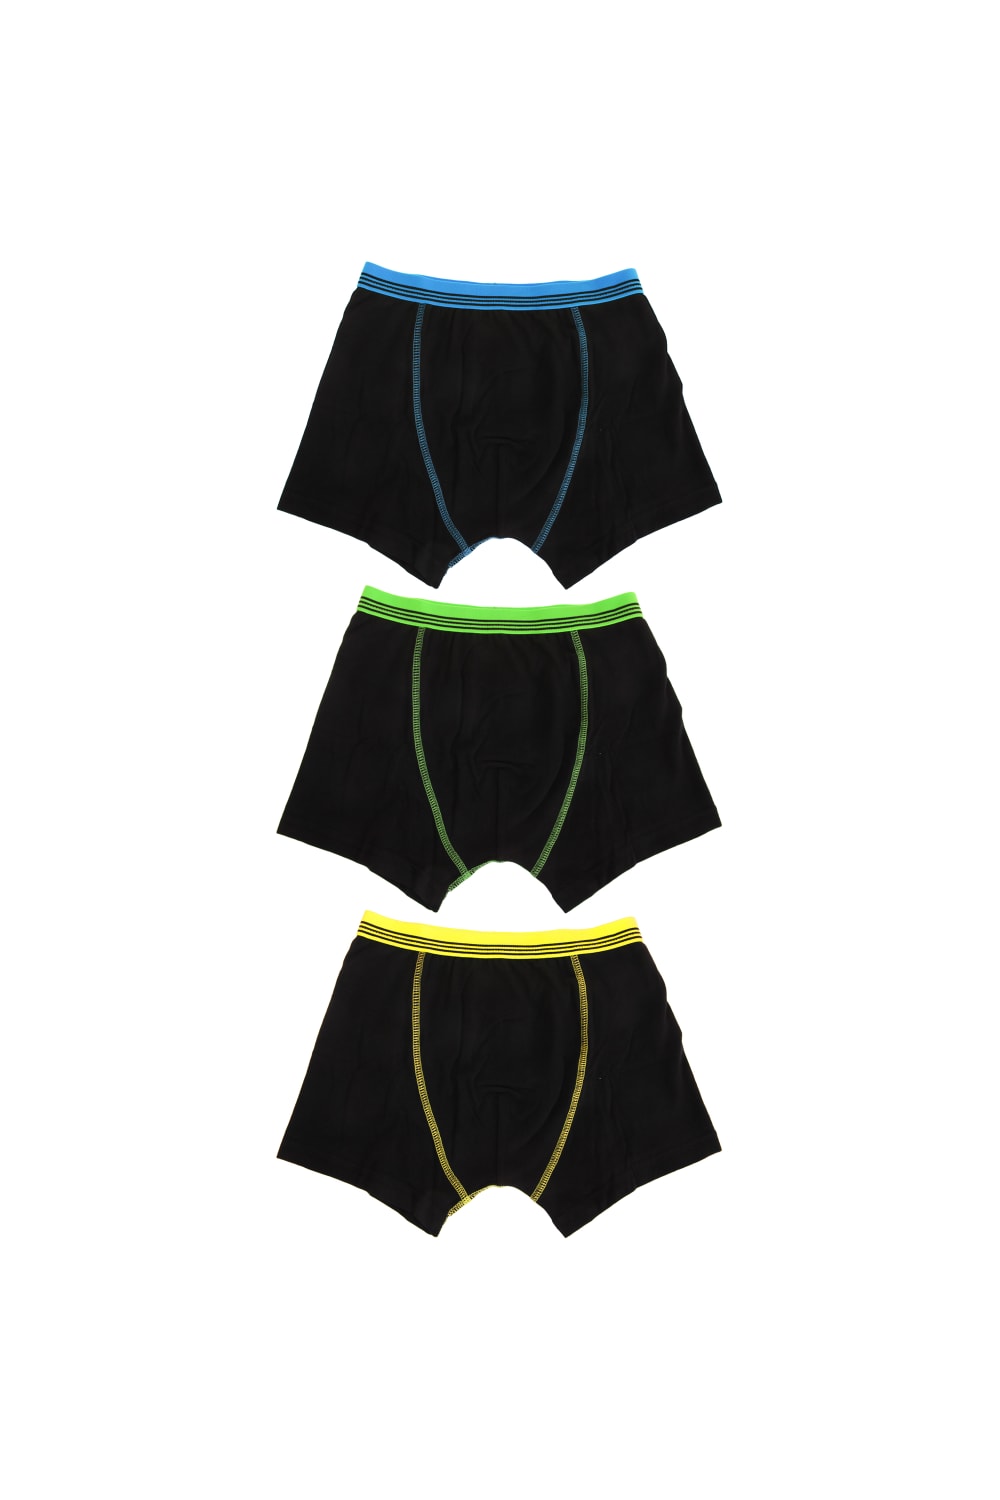 Boys/Childrens Trunks Underwear (3 Pack) - Black